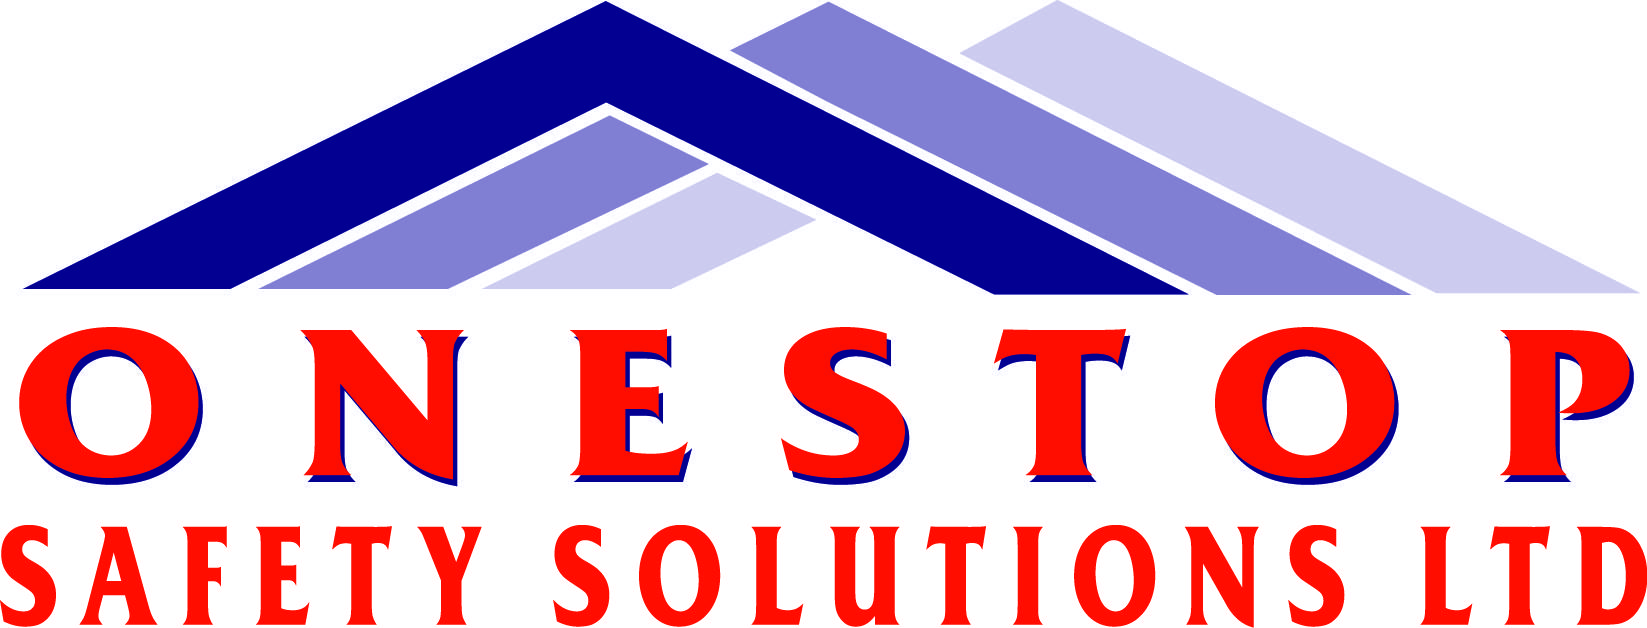 Onestop Safety Solutions Ltd